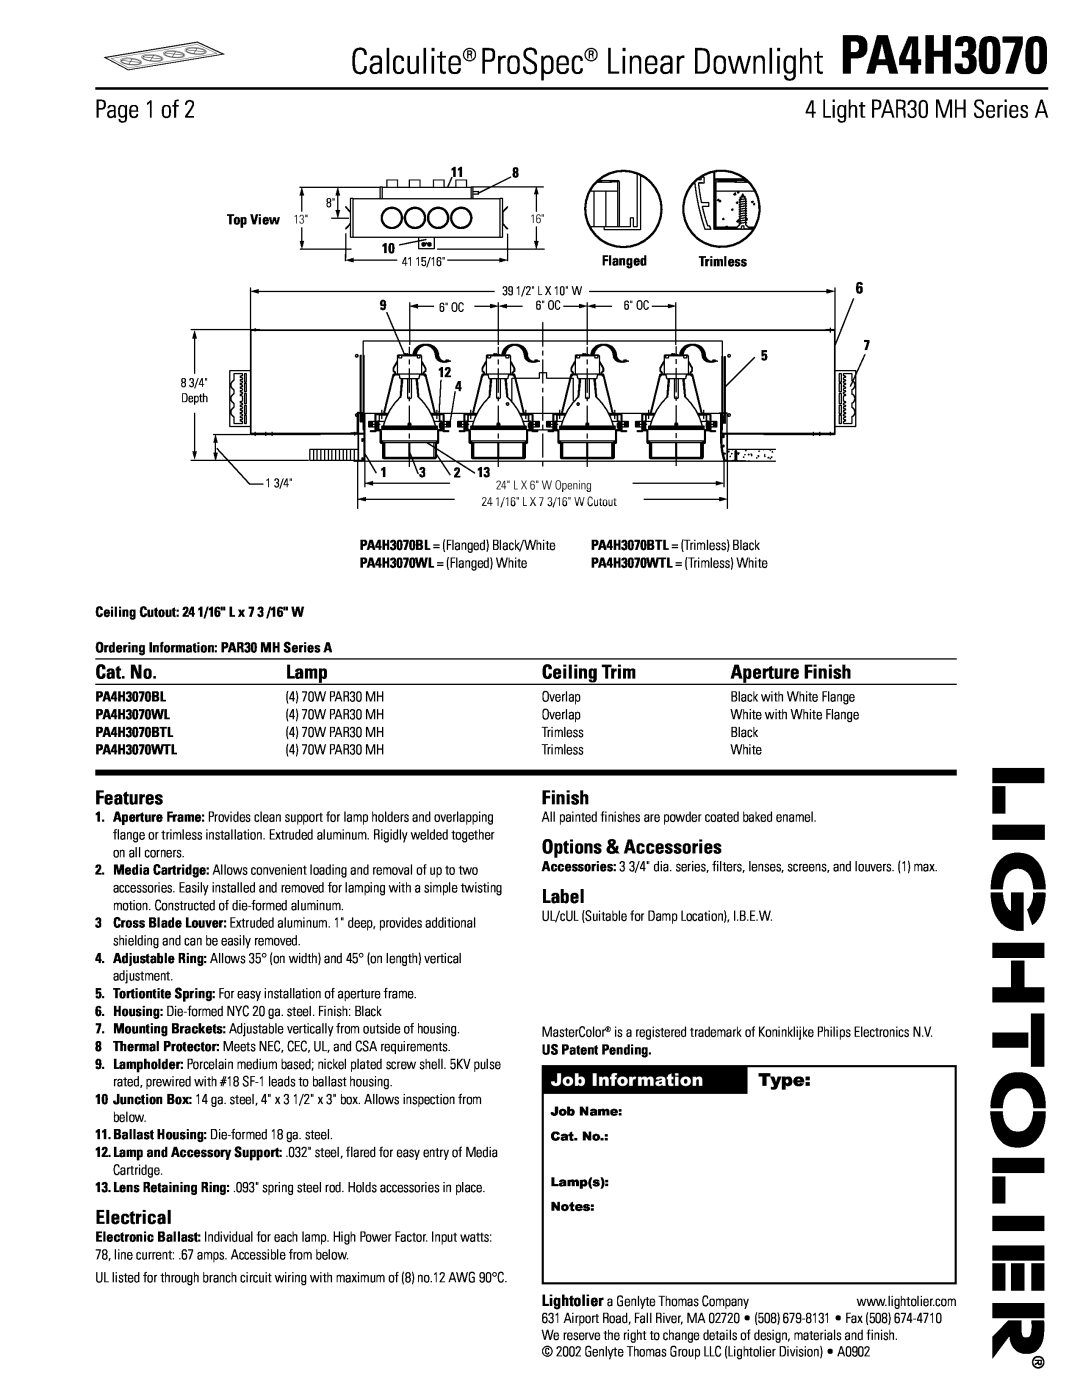 Lightolier manual Calculite ProSpec Linear Downlight PA4H3070, Page 1 of, Light PAR30 MH Series A, Cat. No, Lamp, Label 